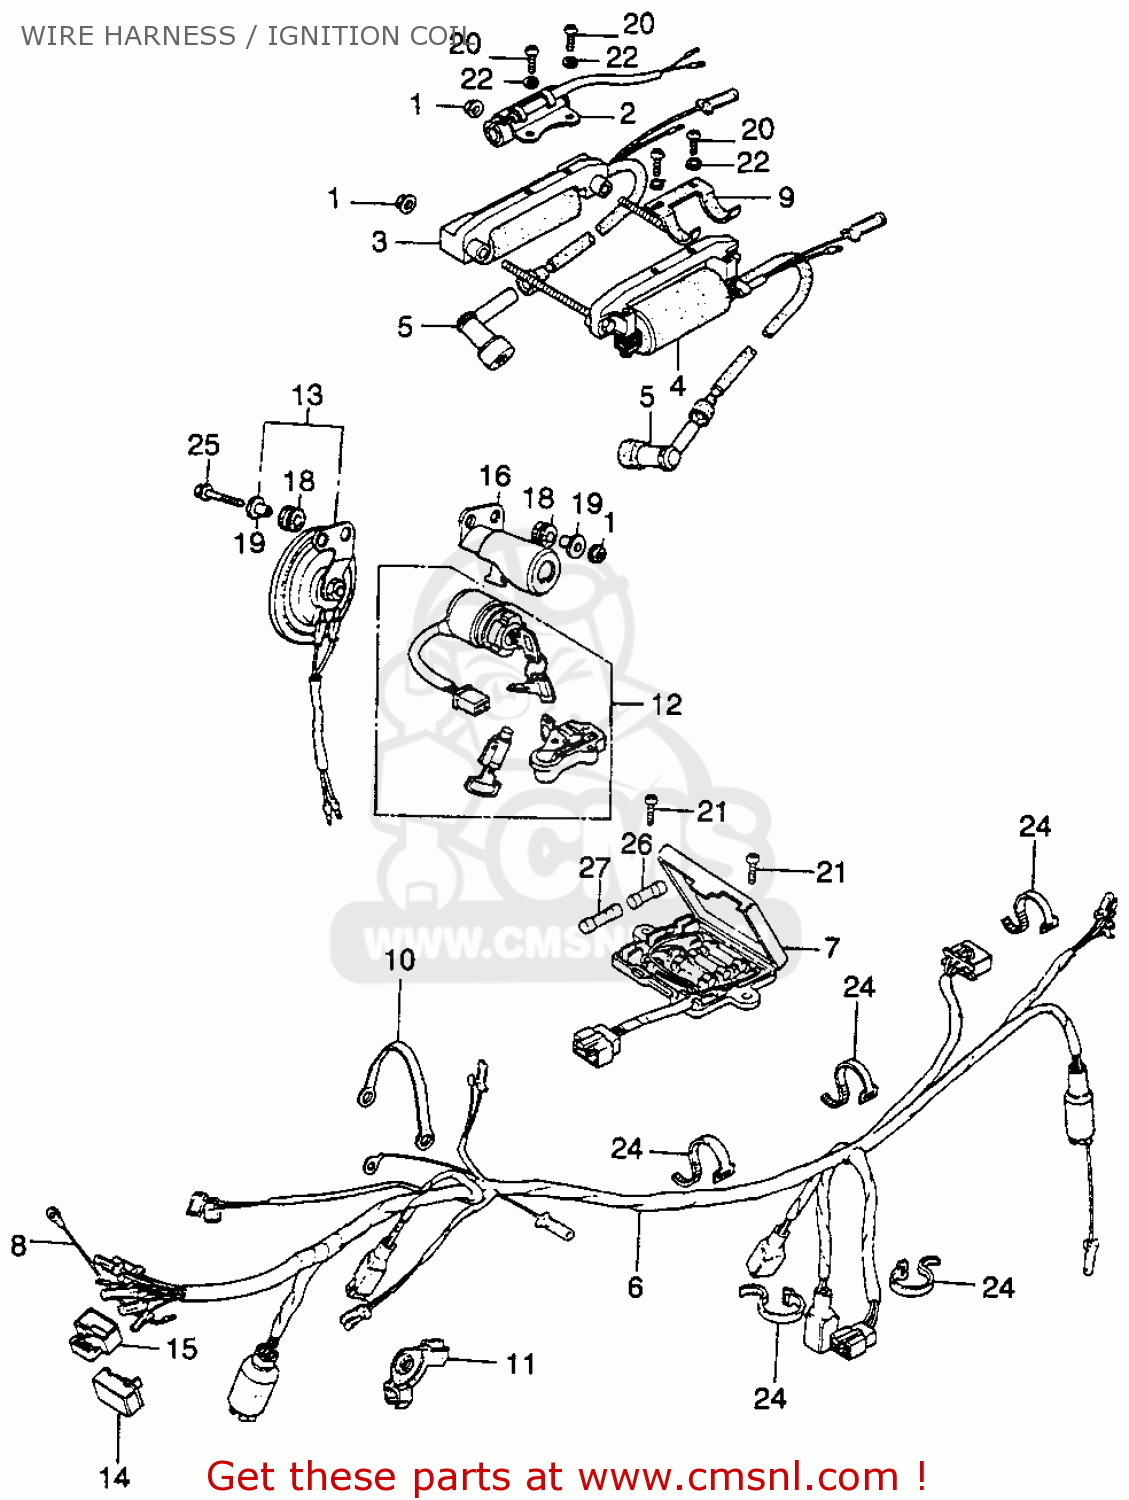 1974 honda cb360 wiring diagram